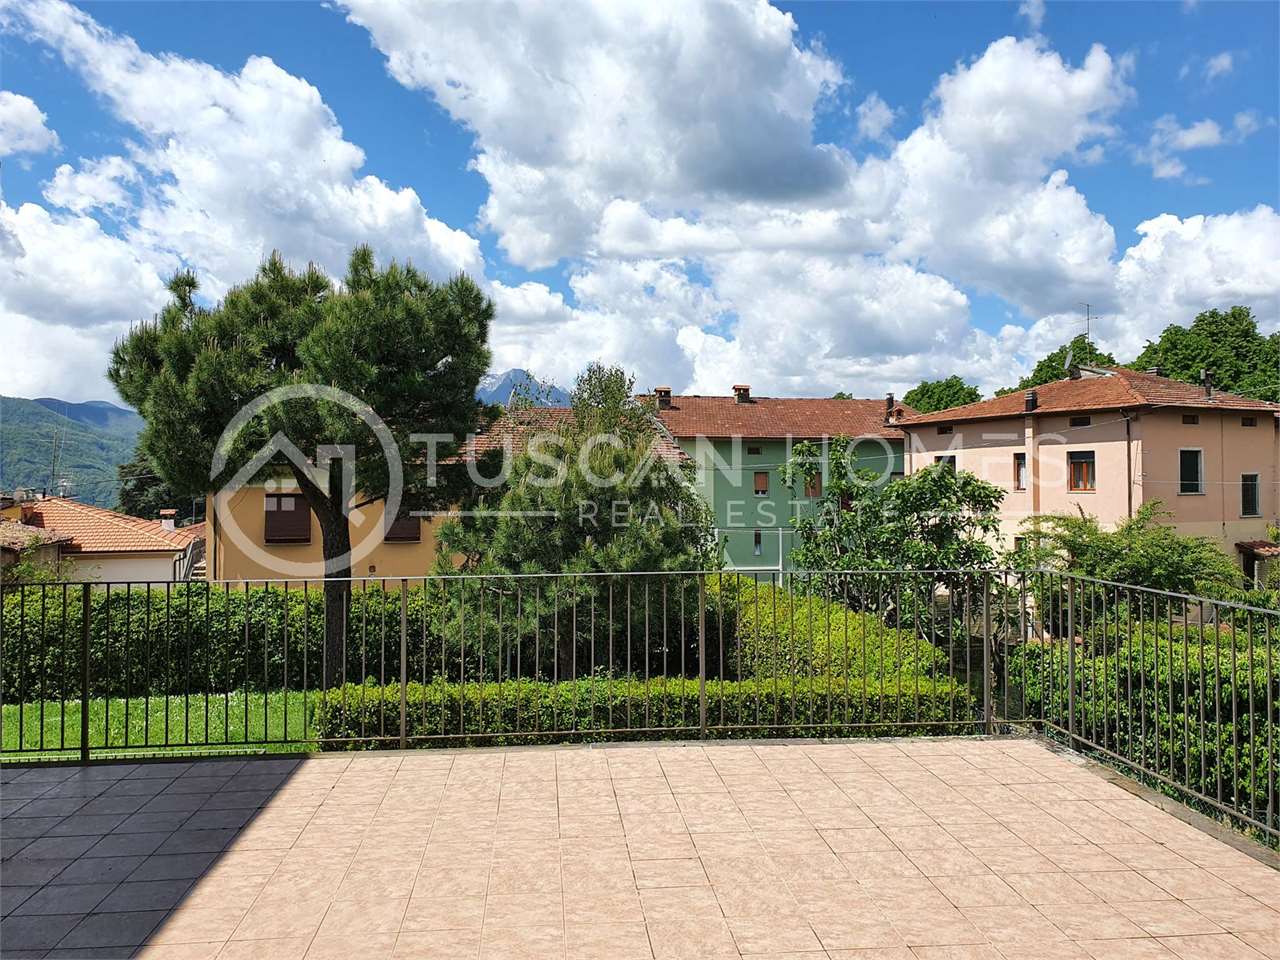 for-sale-apartment-three-bedrooms-panoramic-terrace-garage-barga-tuscany